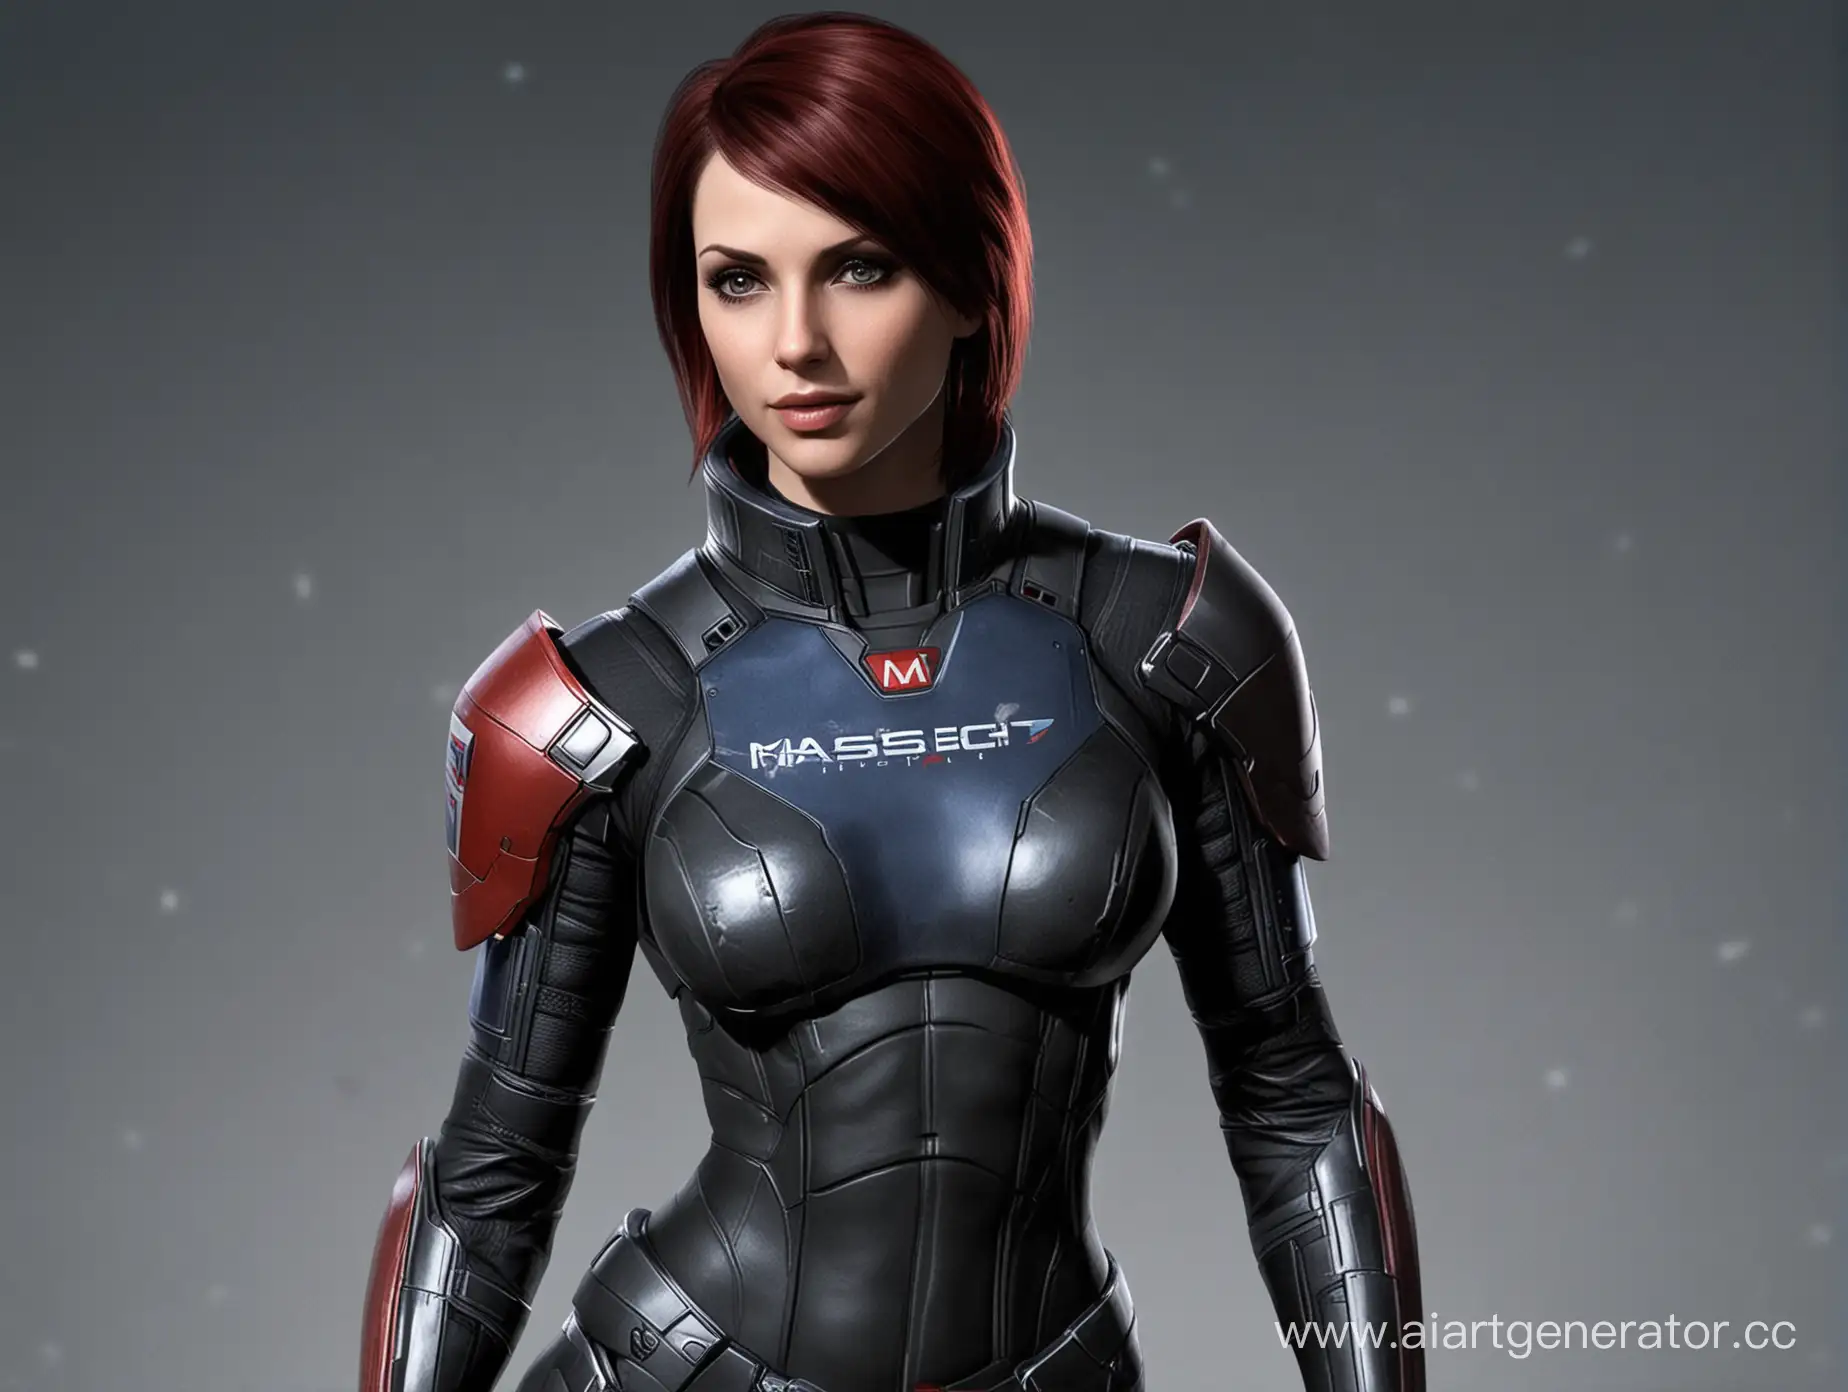 Adventurous-Commander-Jane-Shepard-from-Mass-Effect-in-SciFi-Action